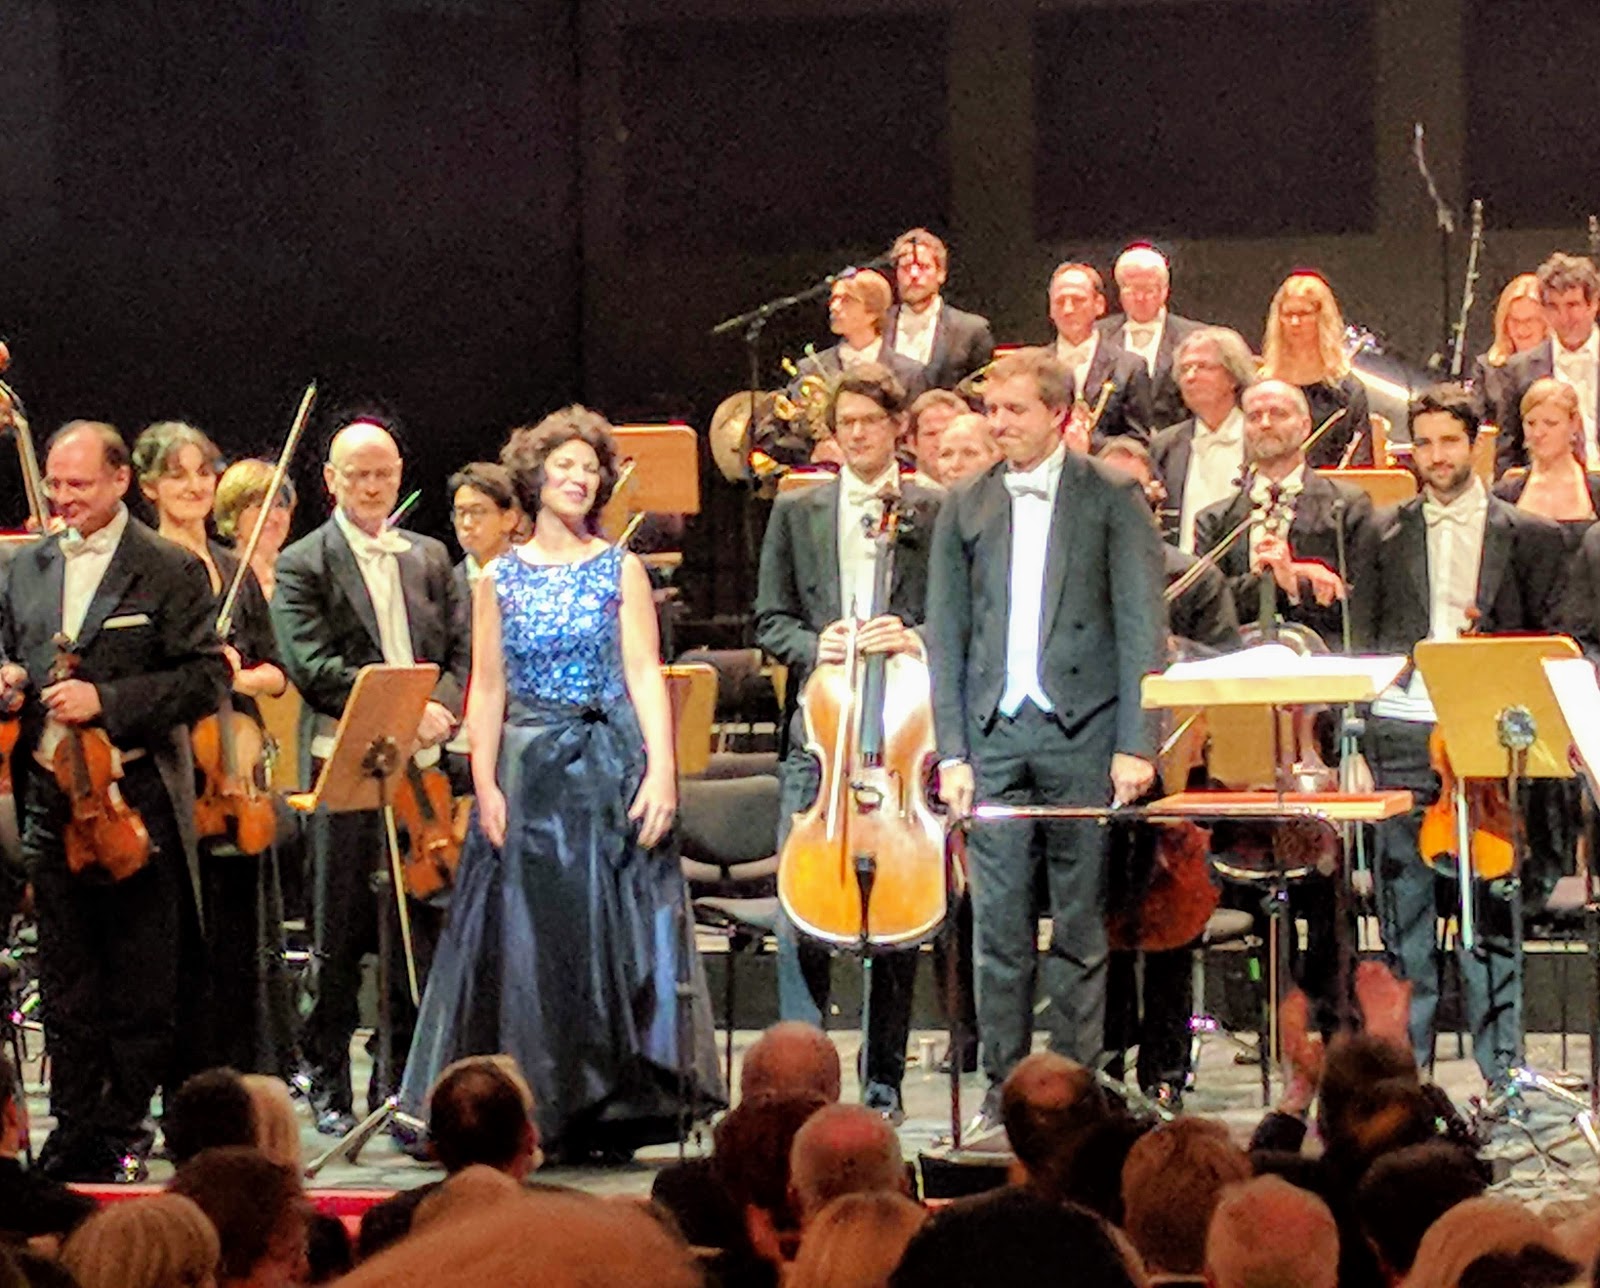 Concert d'Académie du Bayerische Staatsorchester: Elisabeth Kulman interprète les Wesendonck-Lieder